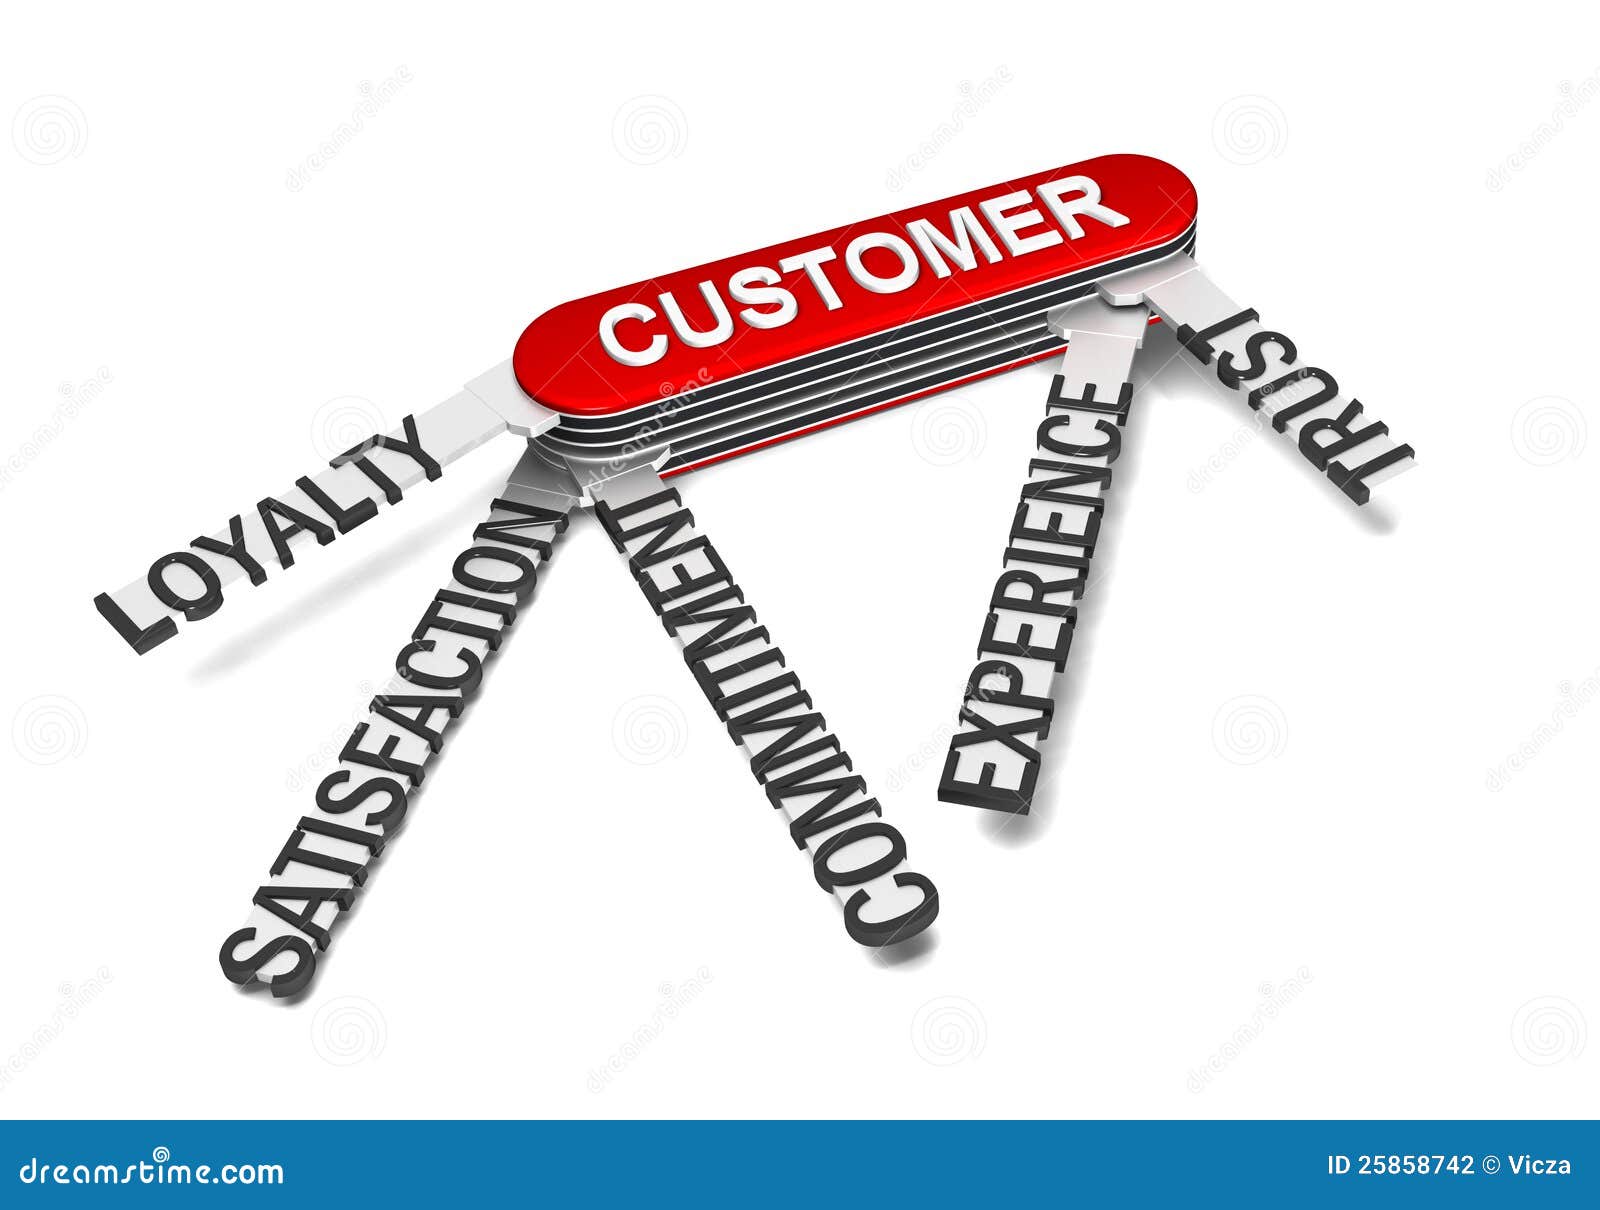 five characteristics of great customer interaction